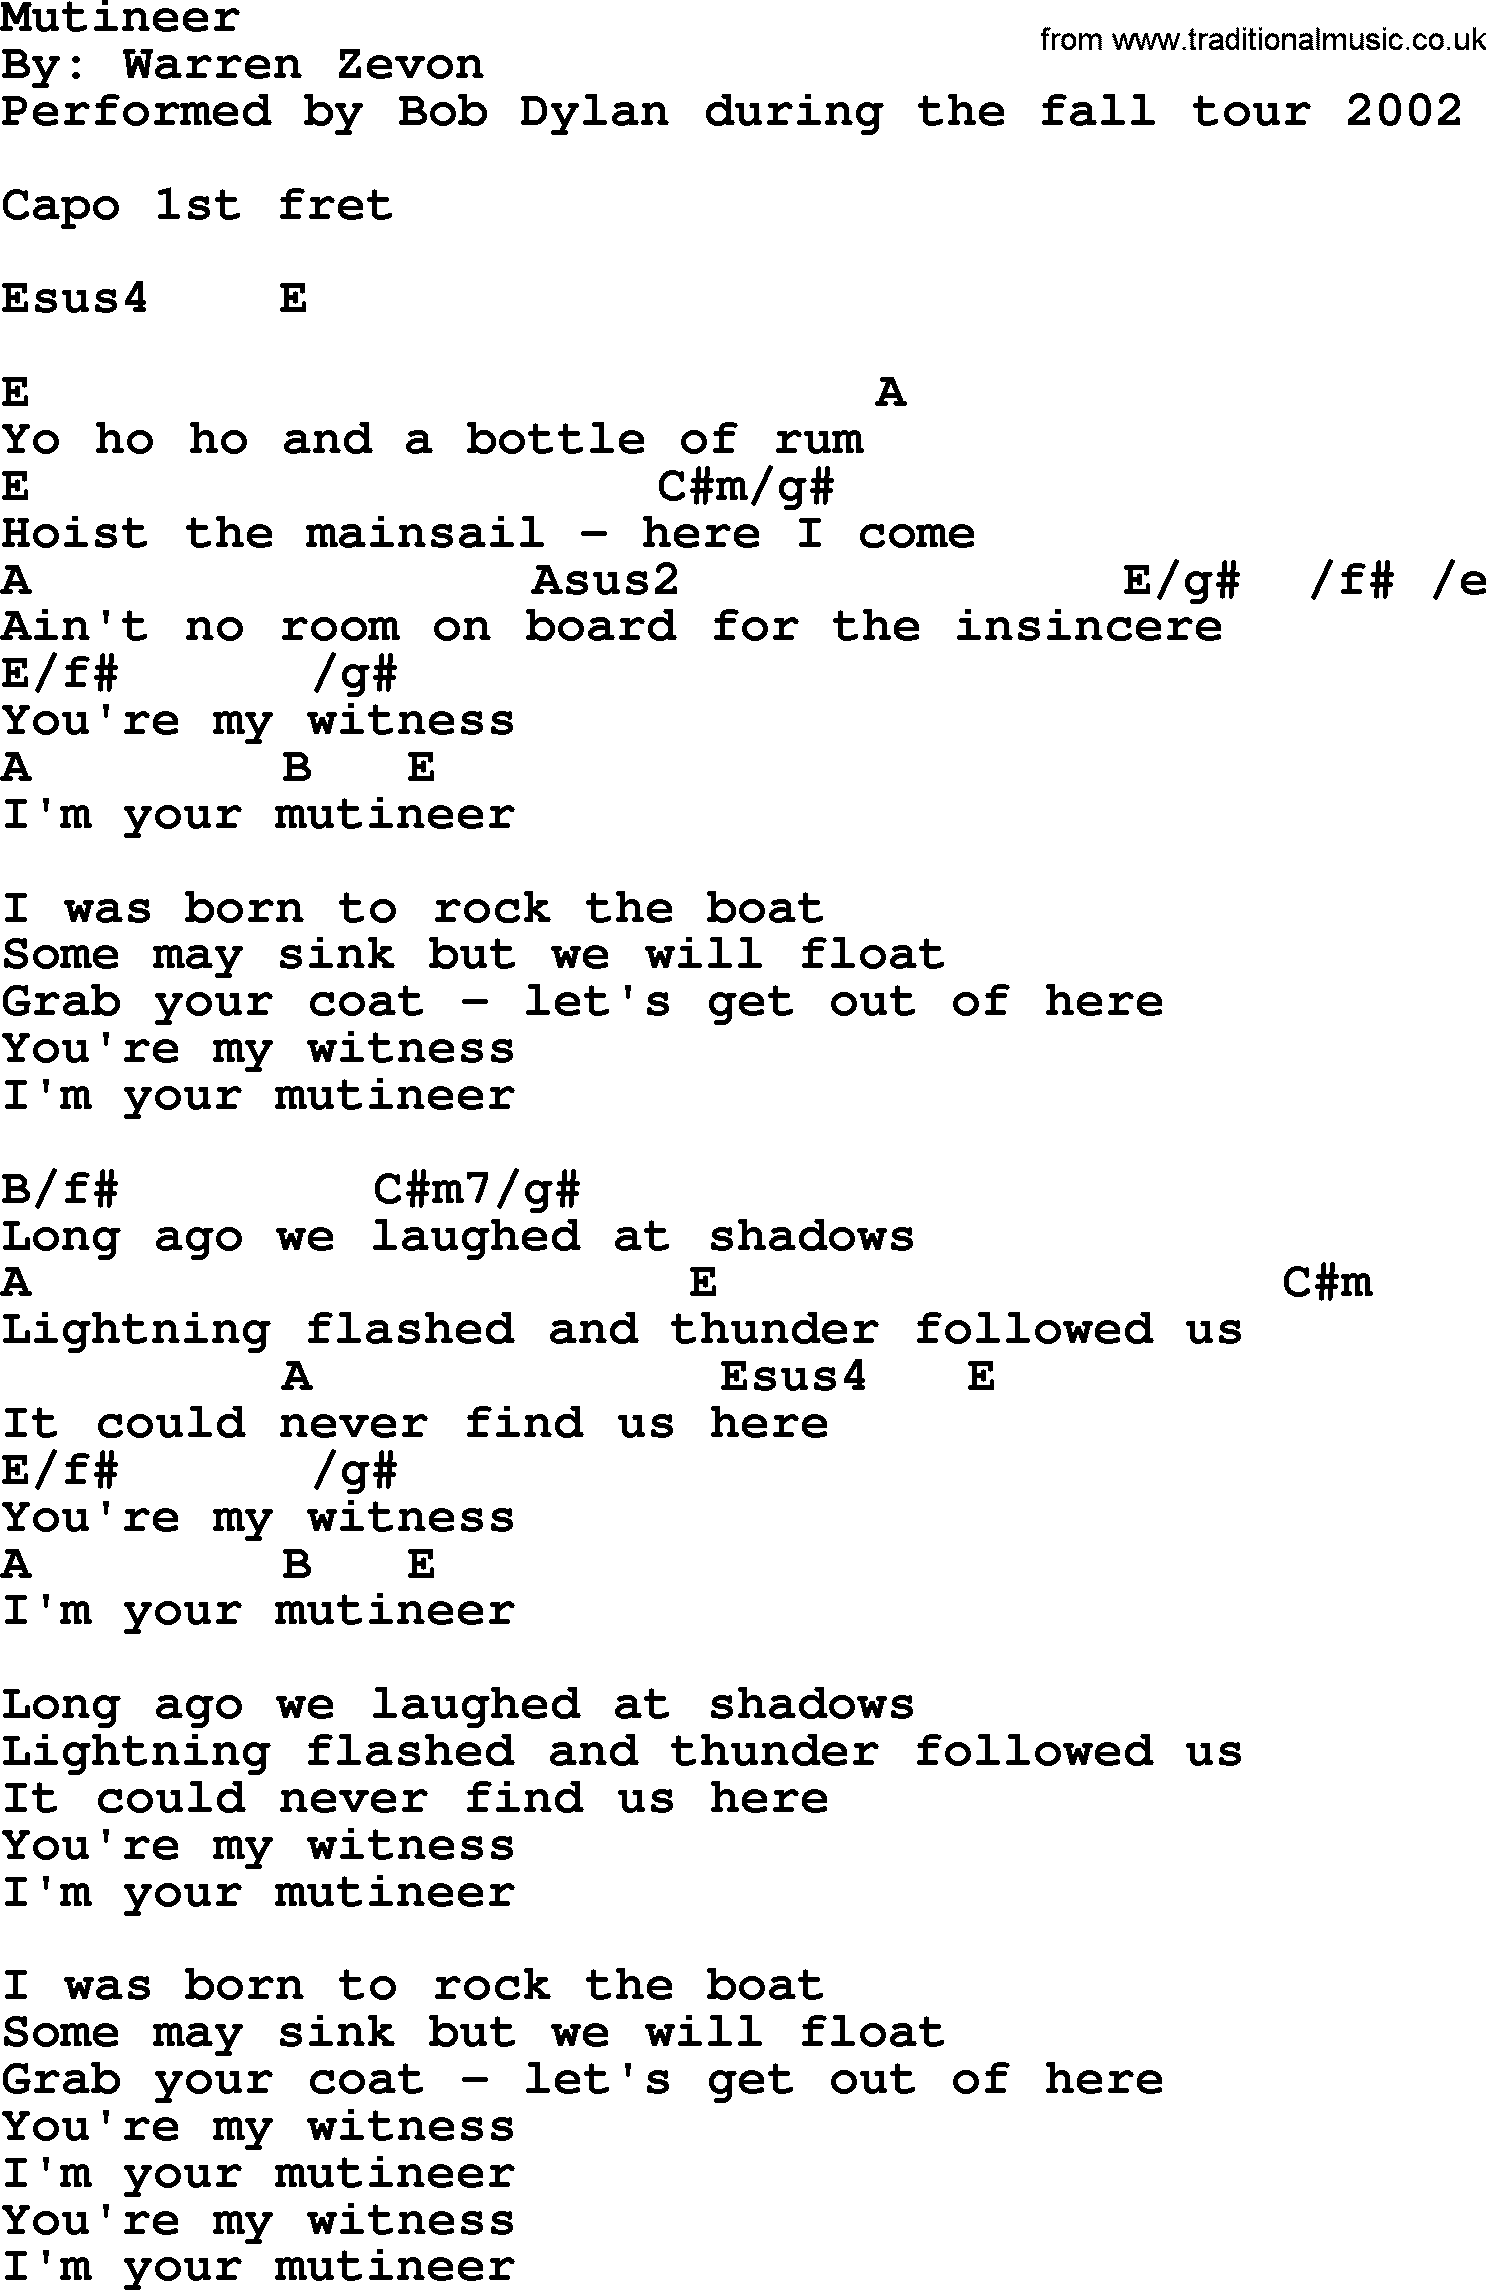 Bob Dylan song, lyrics with chords - Mutineer